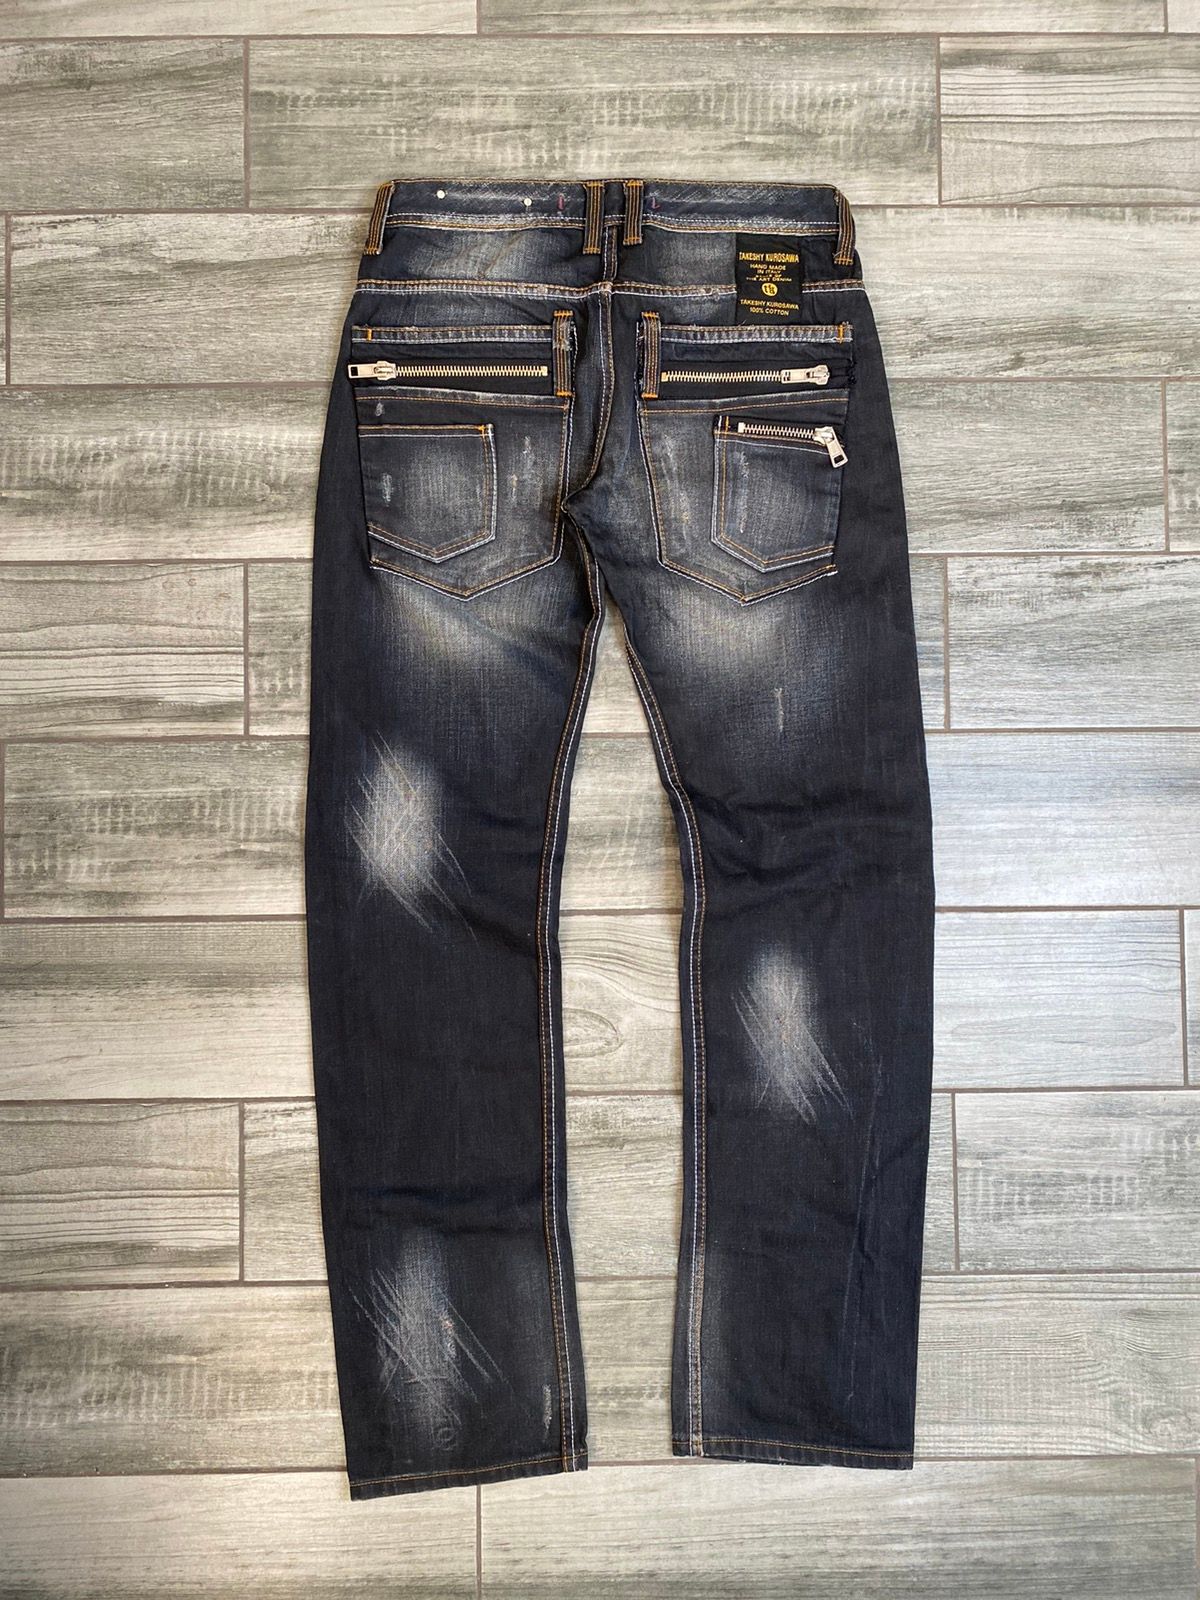 Takeshy Kurosawa Takeshy Kurosawa Men's Zip Details Denim Jeans Made in ...